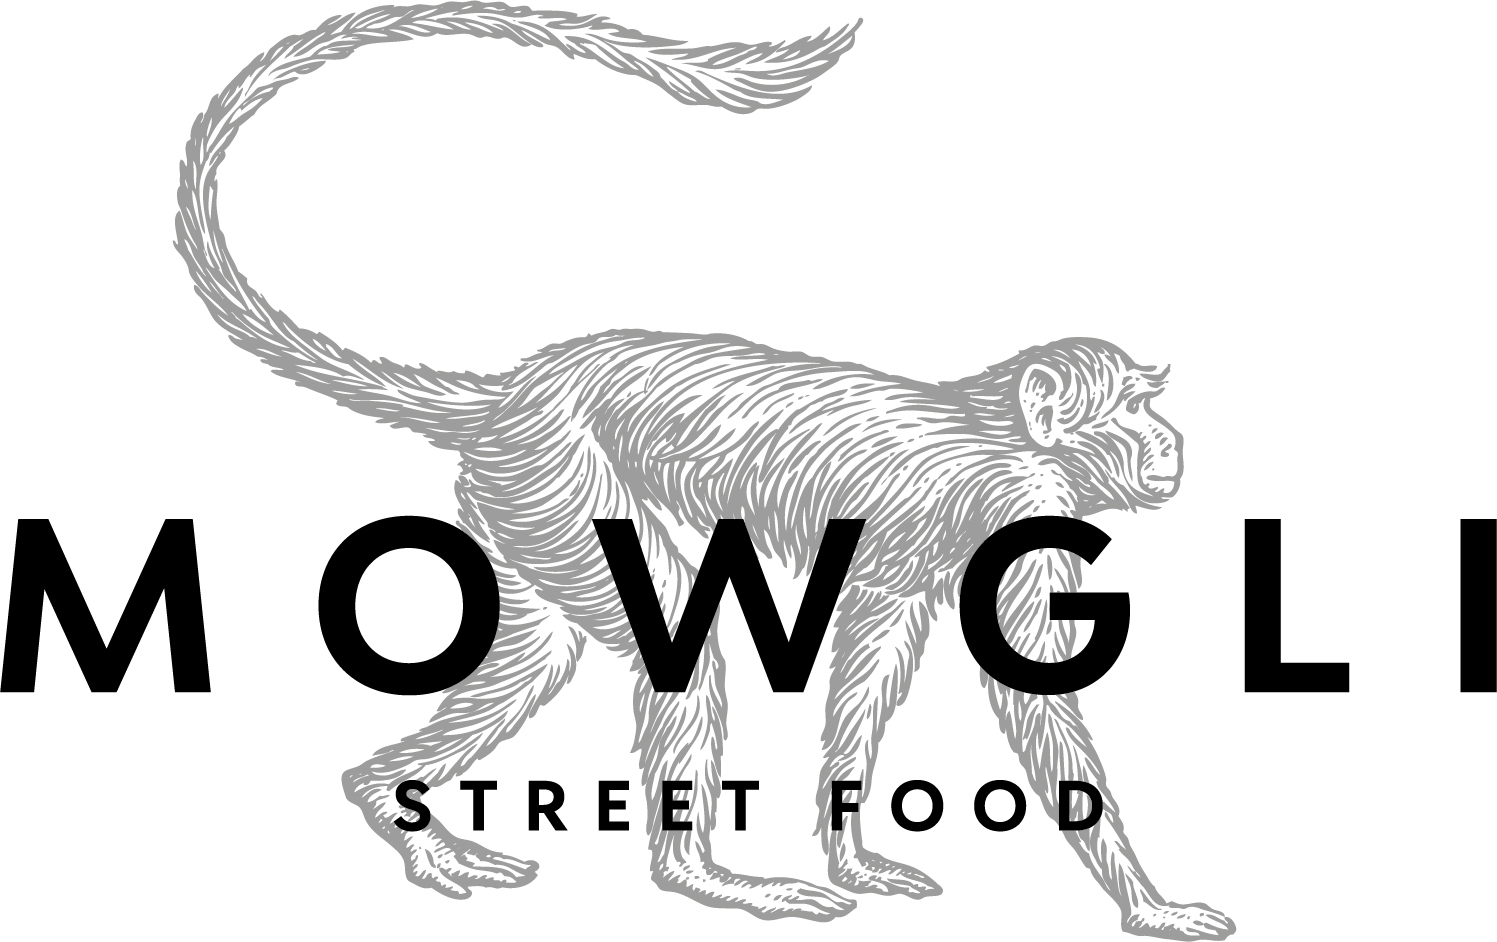 Brand logo for Mowgli